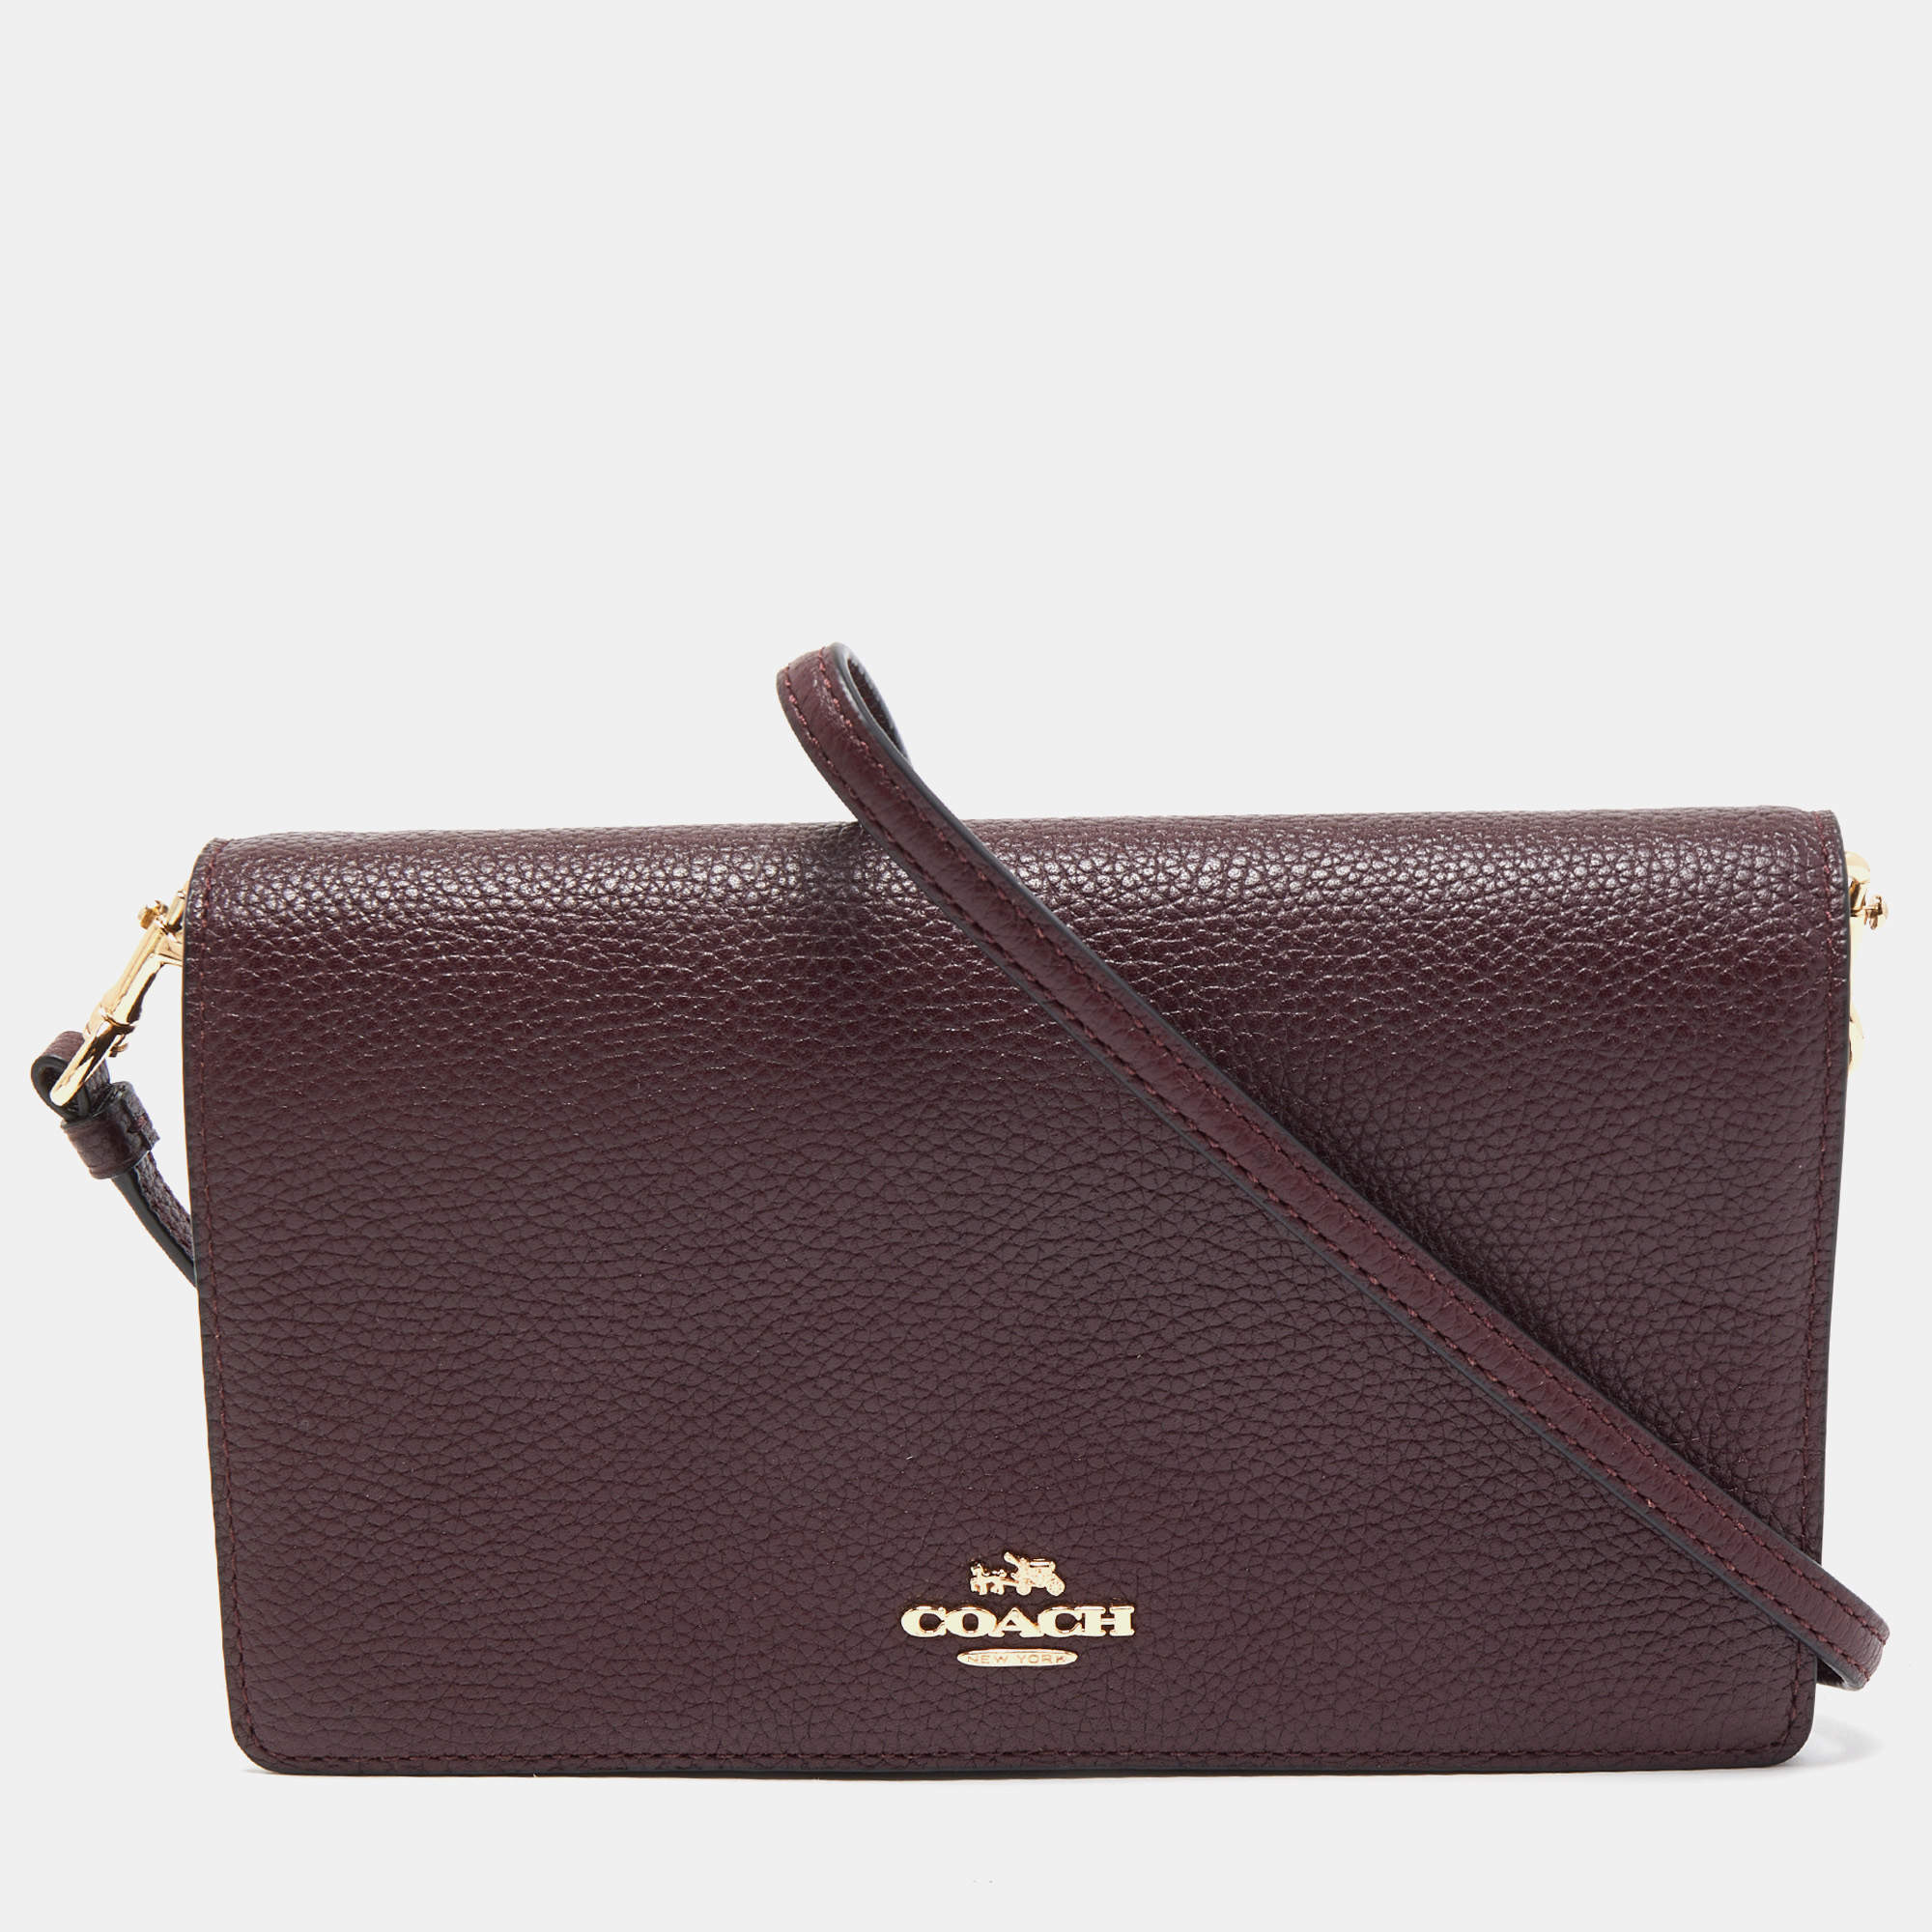 Vintage COACH handbag with burgundy straps. This... - Depop